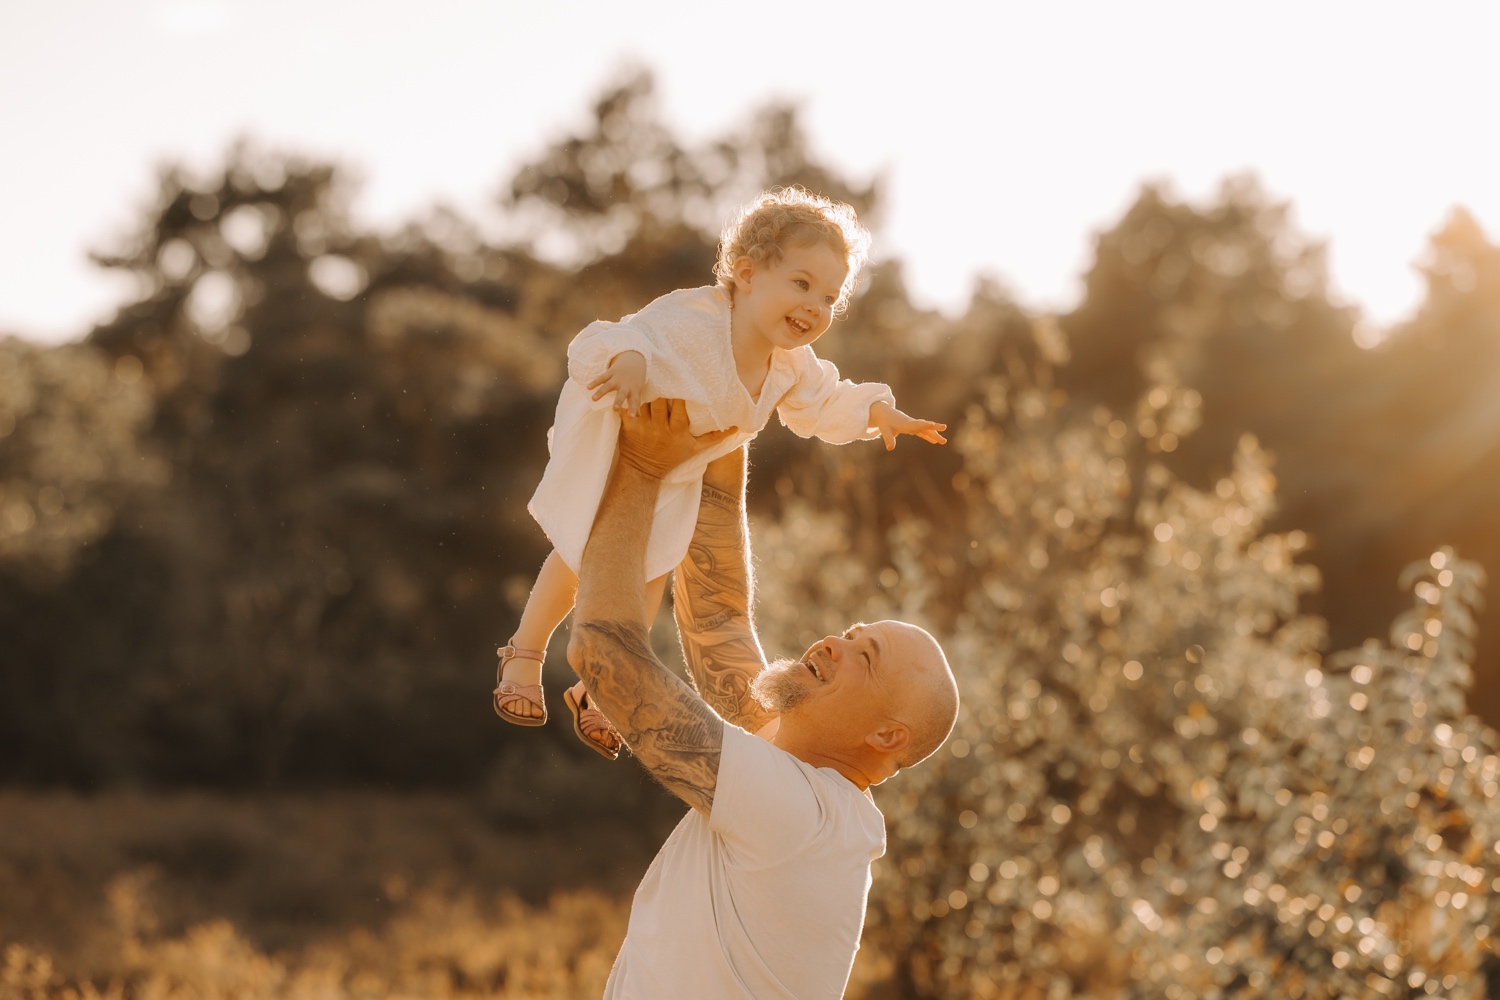 papa zwiert dochtertje in de lucht tijdens fotosessie